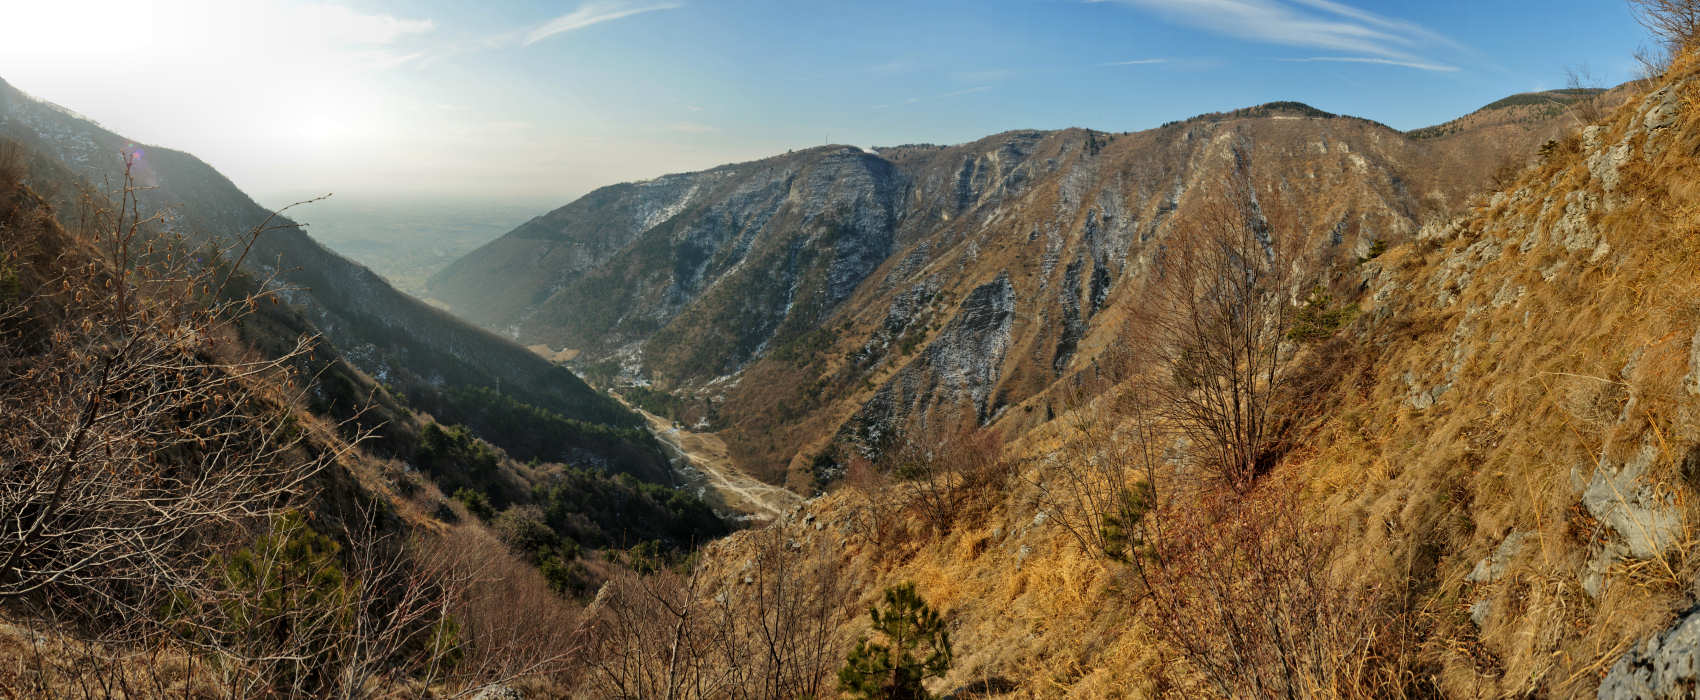 Valle Santa Felicita dal sentiero n.100 - fotografia panoramica